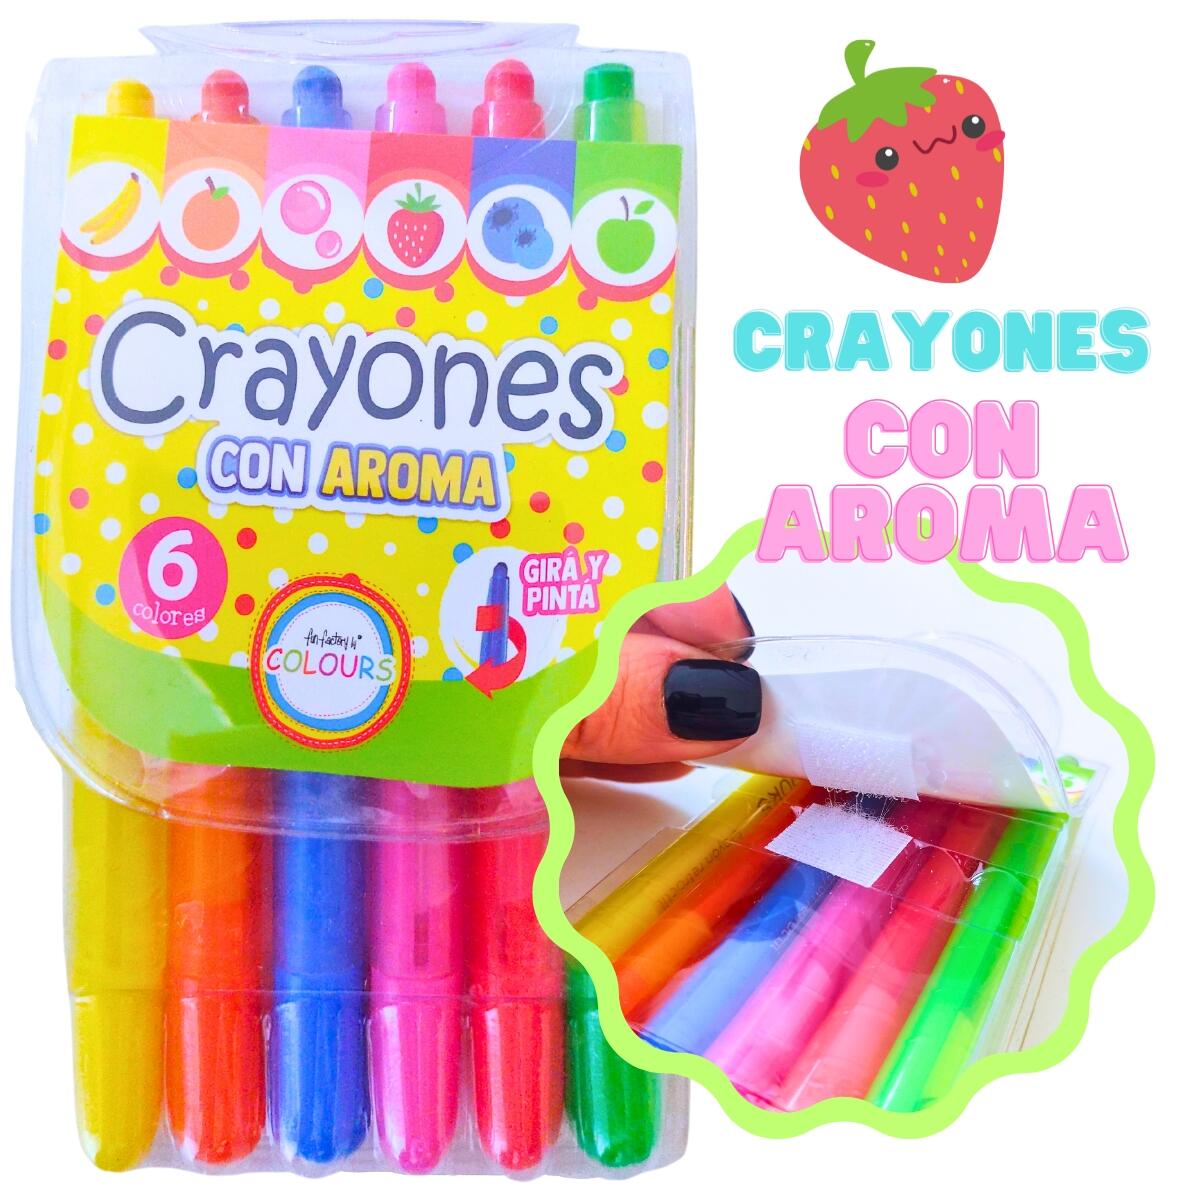 Crayon retractil c/aroma x 6